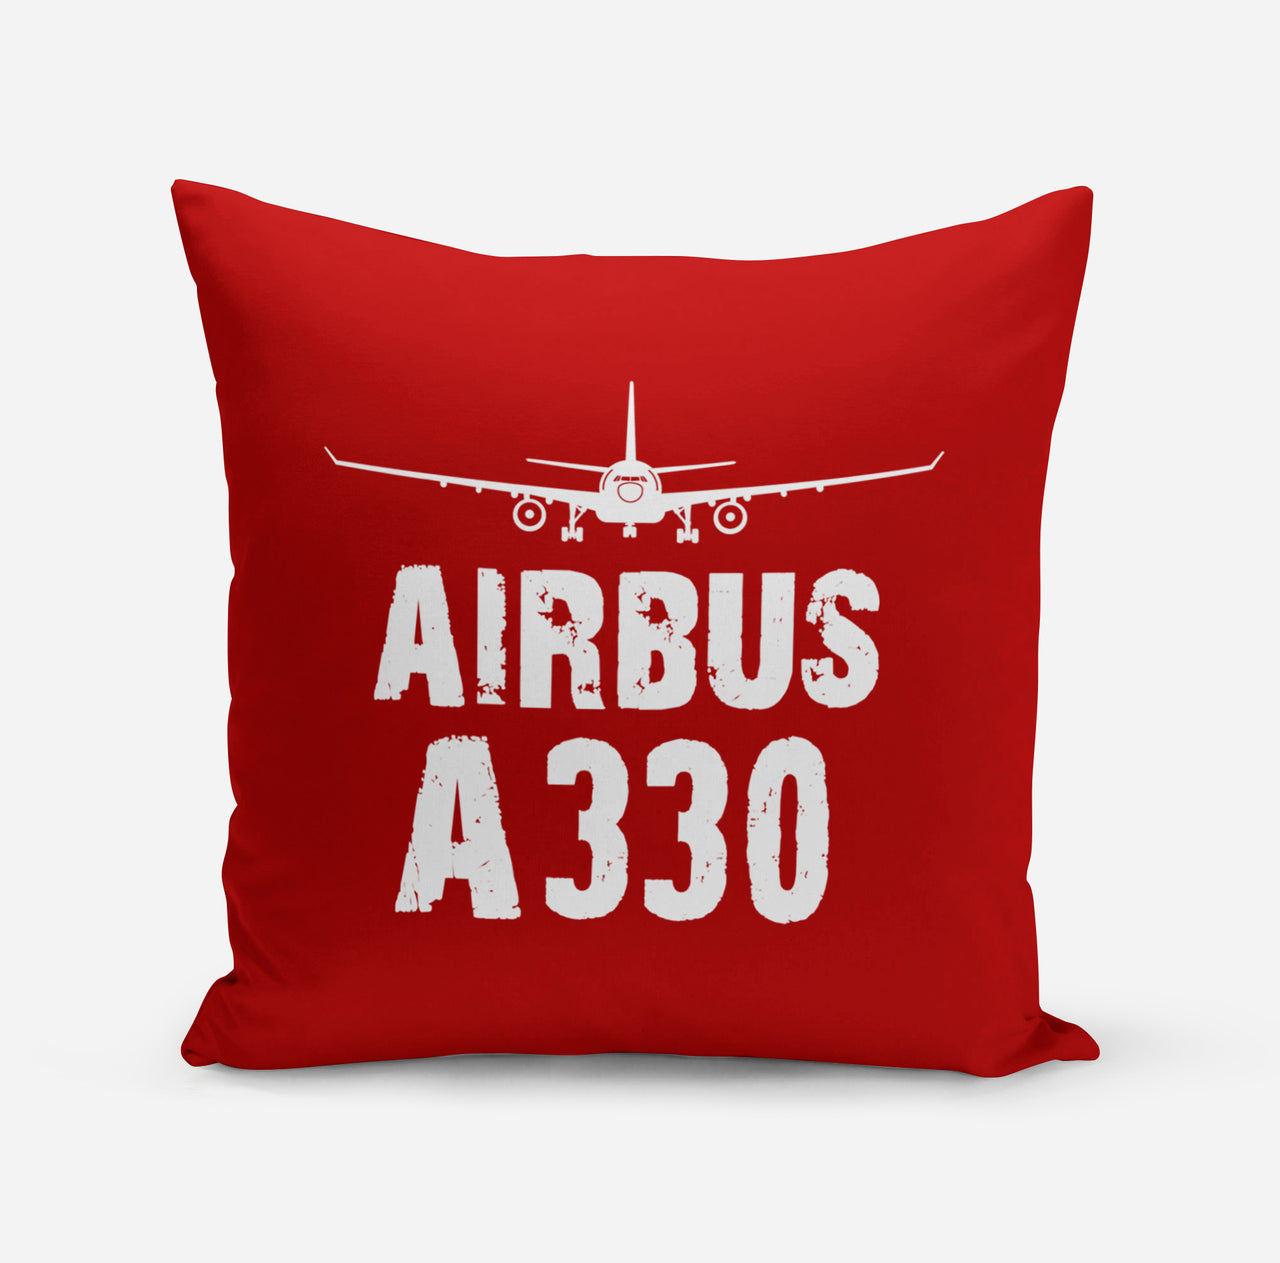 Airbus A330 & Plane Designed Pillows